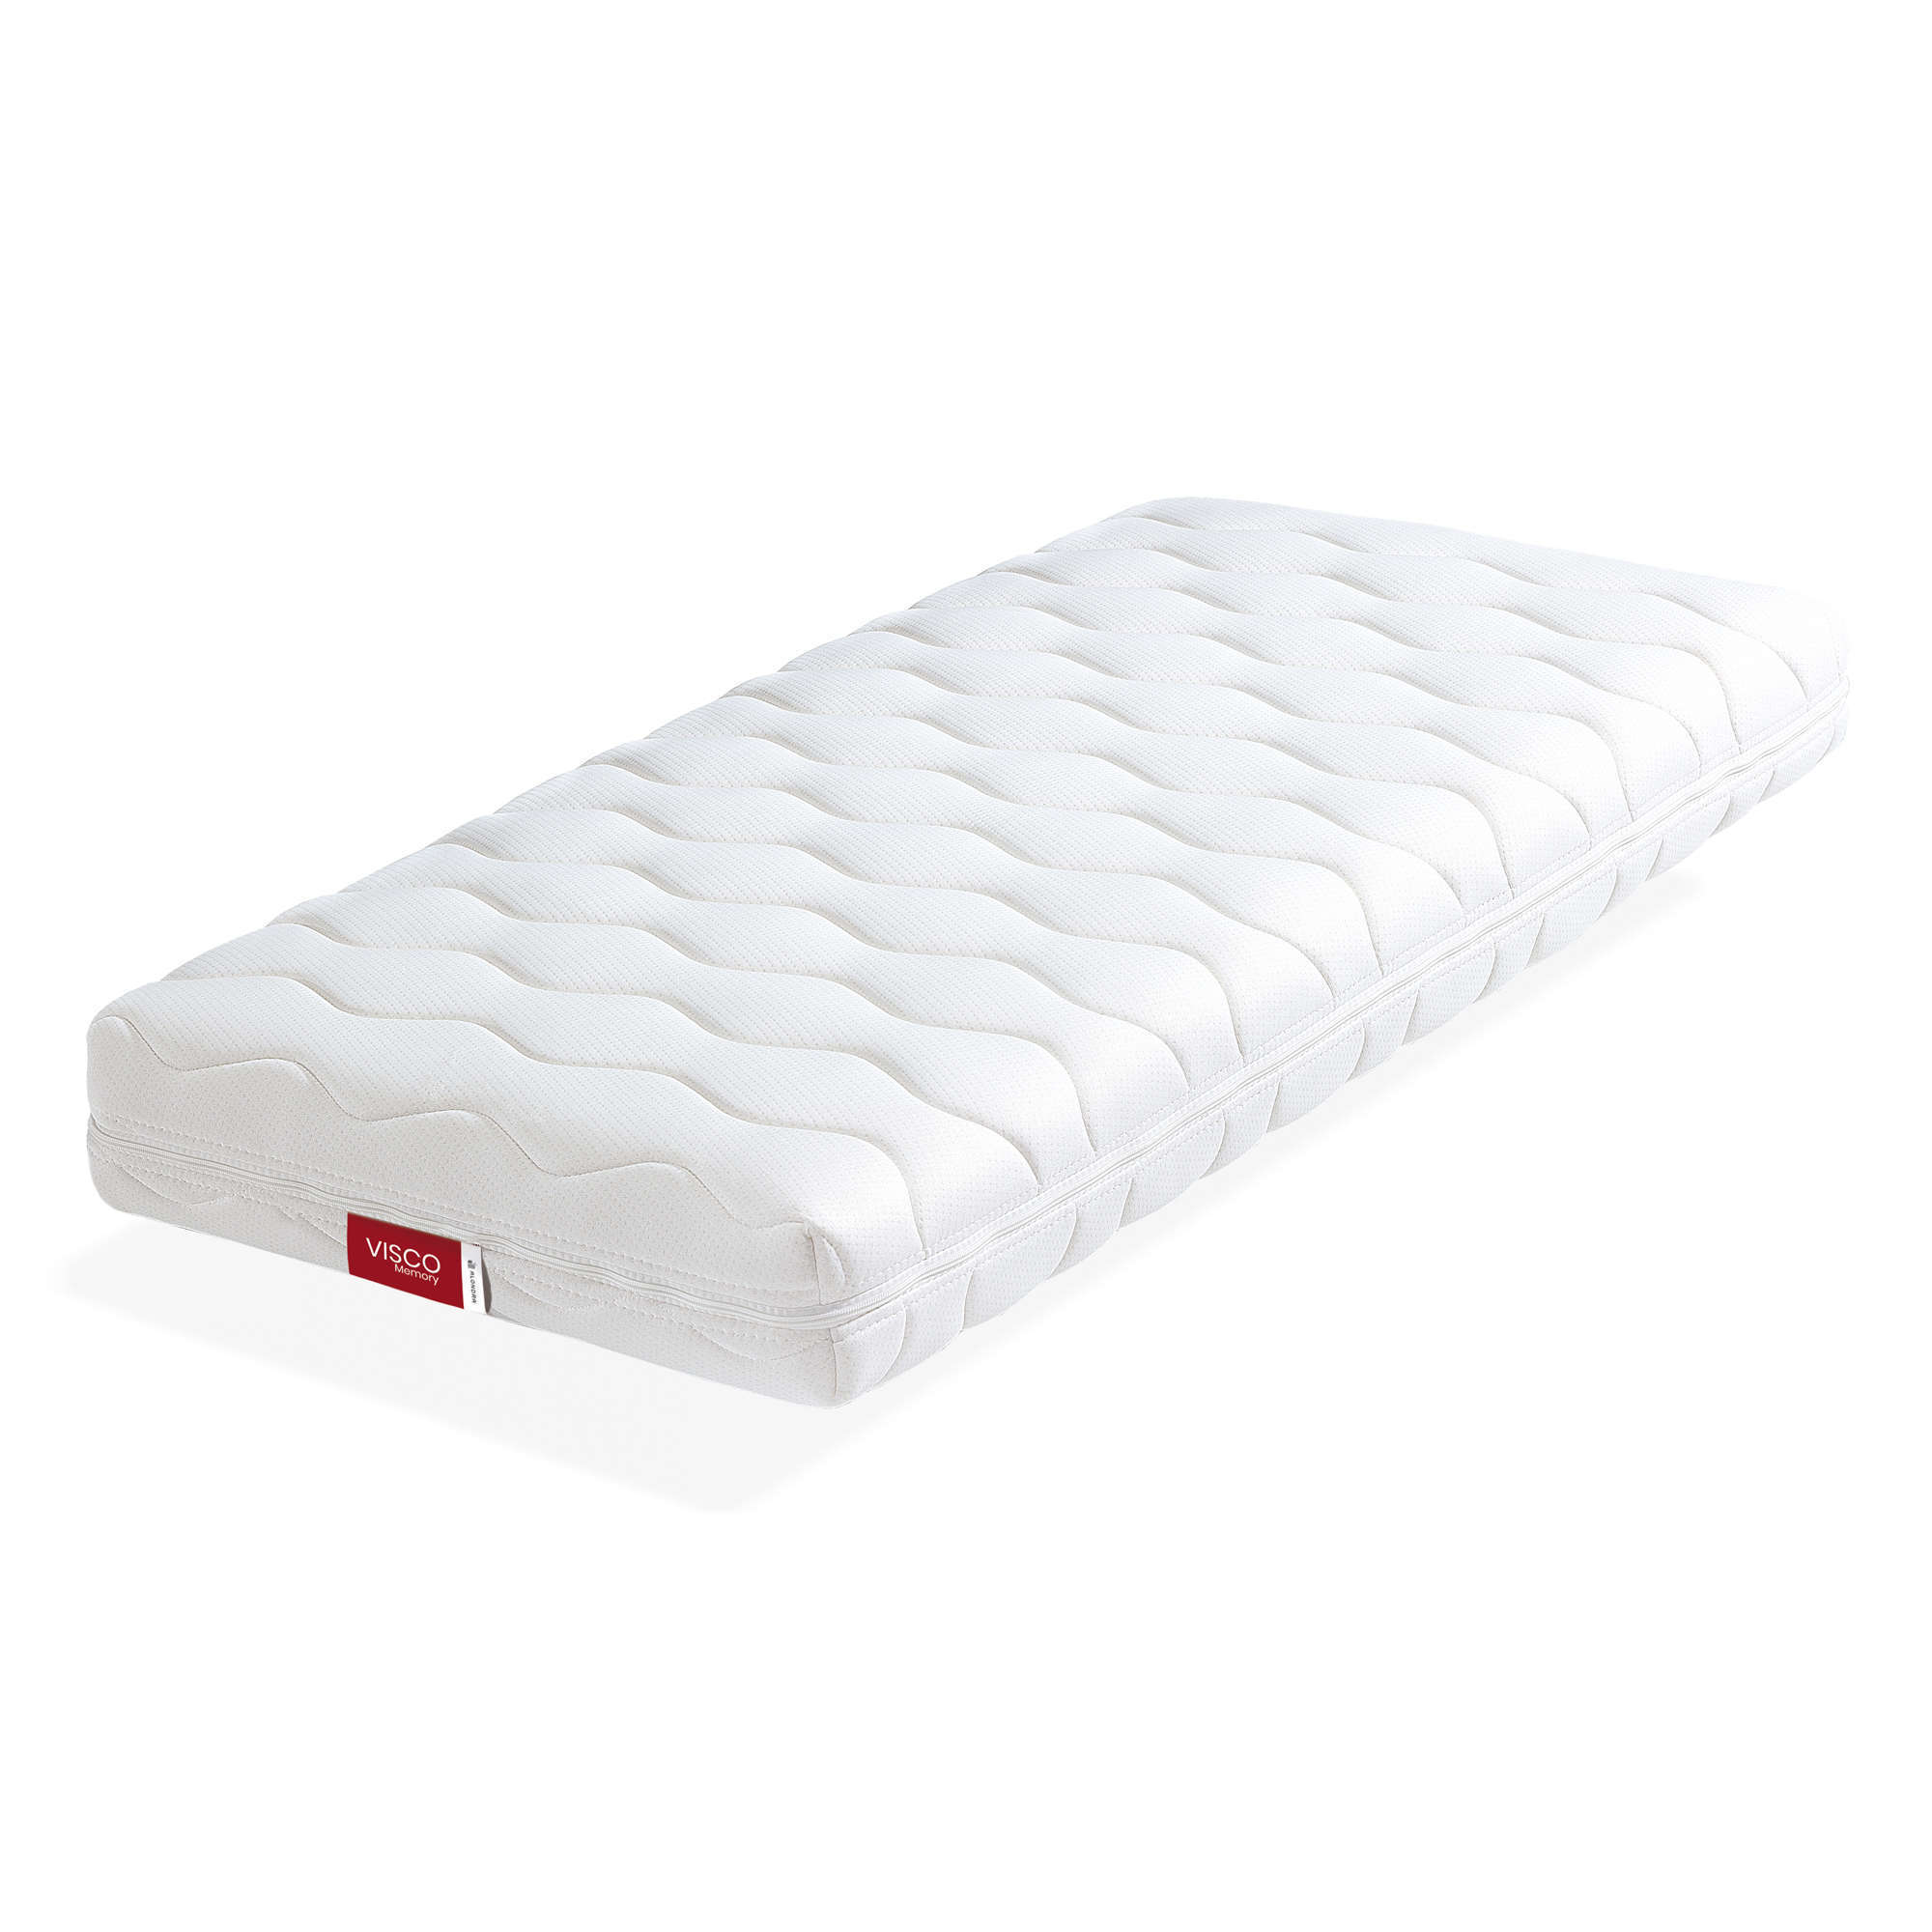 Memory foam mattress for cot